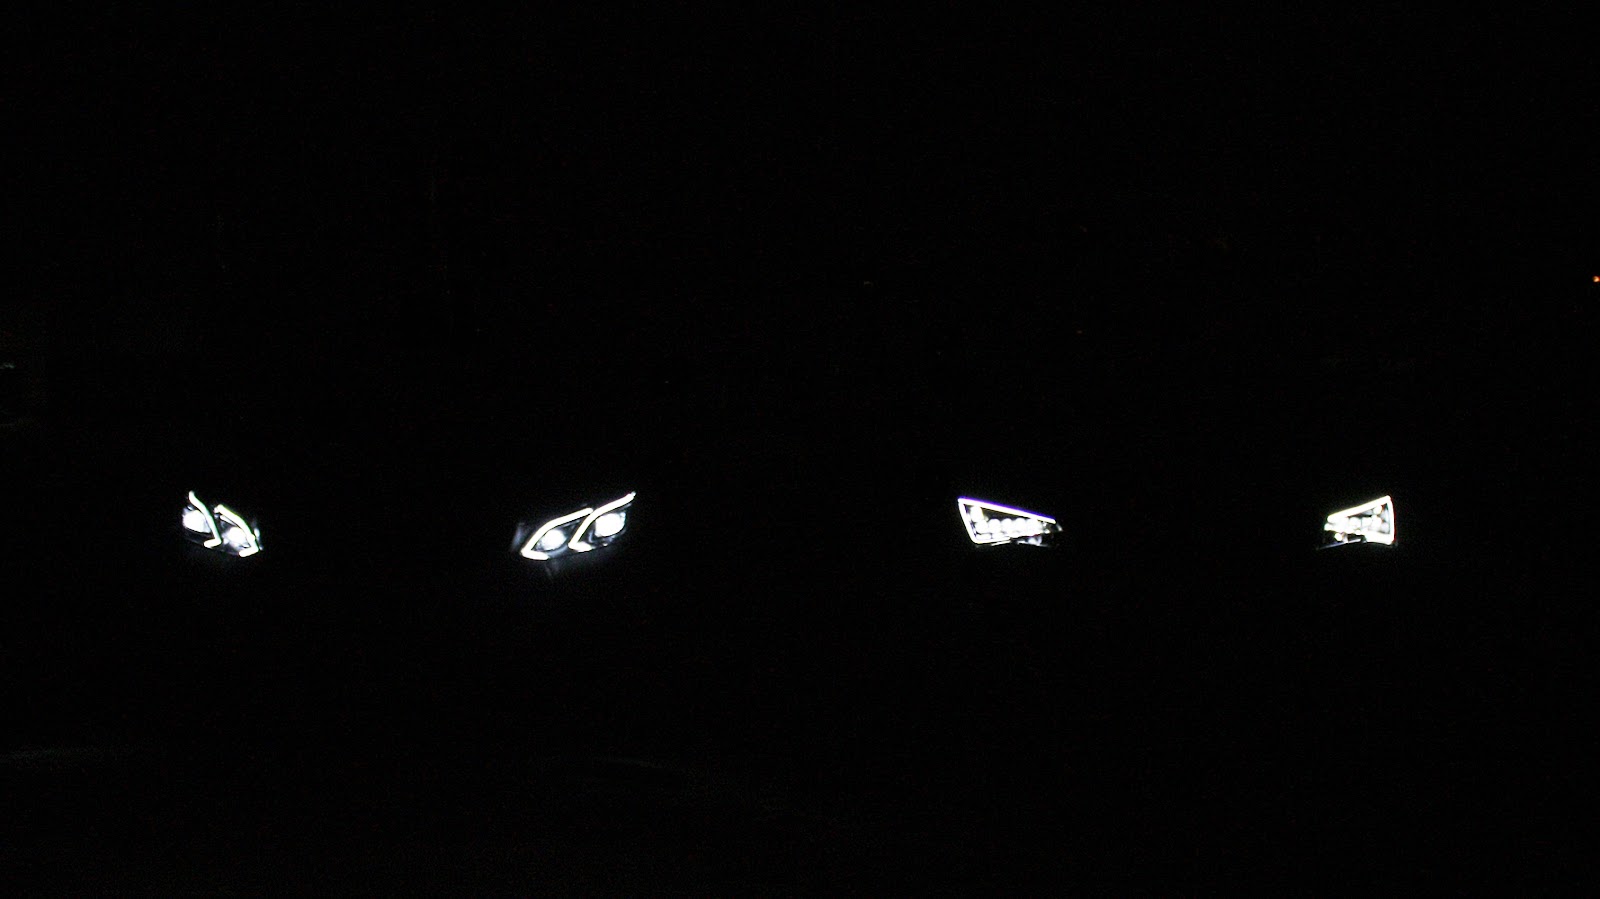 LED-Scheinwerfer-Vergleich: Mercedes-Benz E-Klasse vs. Seat Leon | Photo © Raphael Gürth/autofilou.at